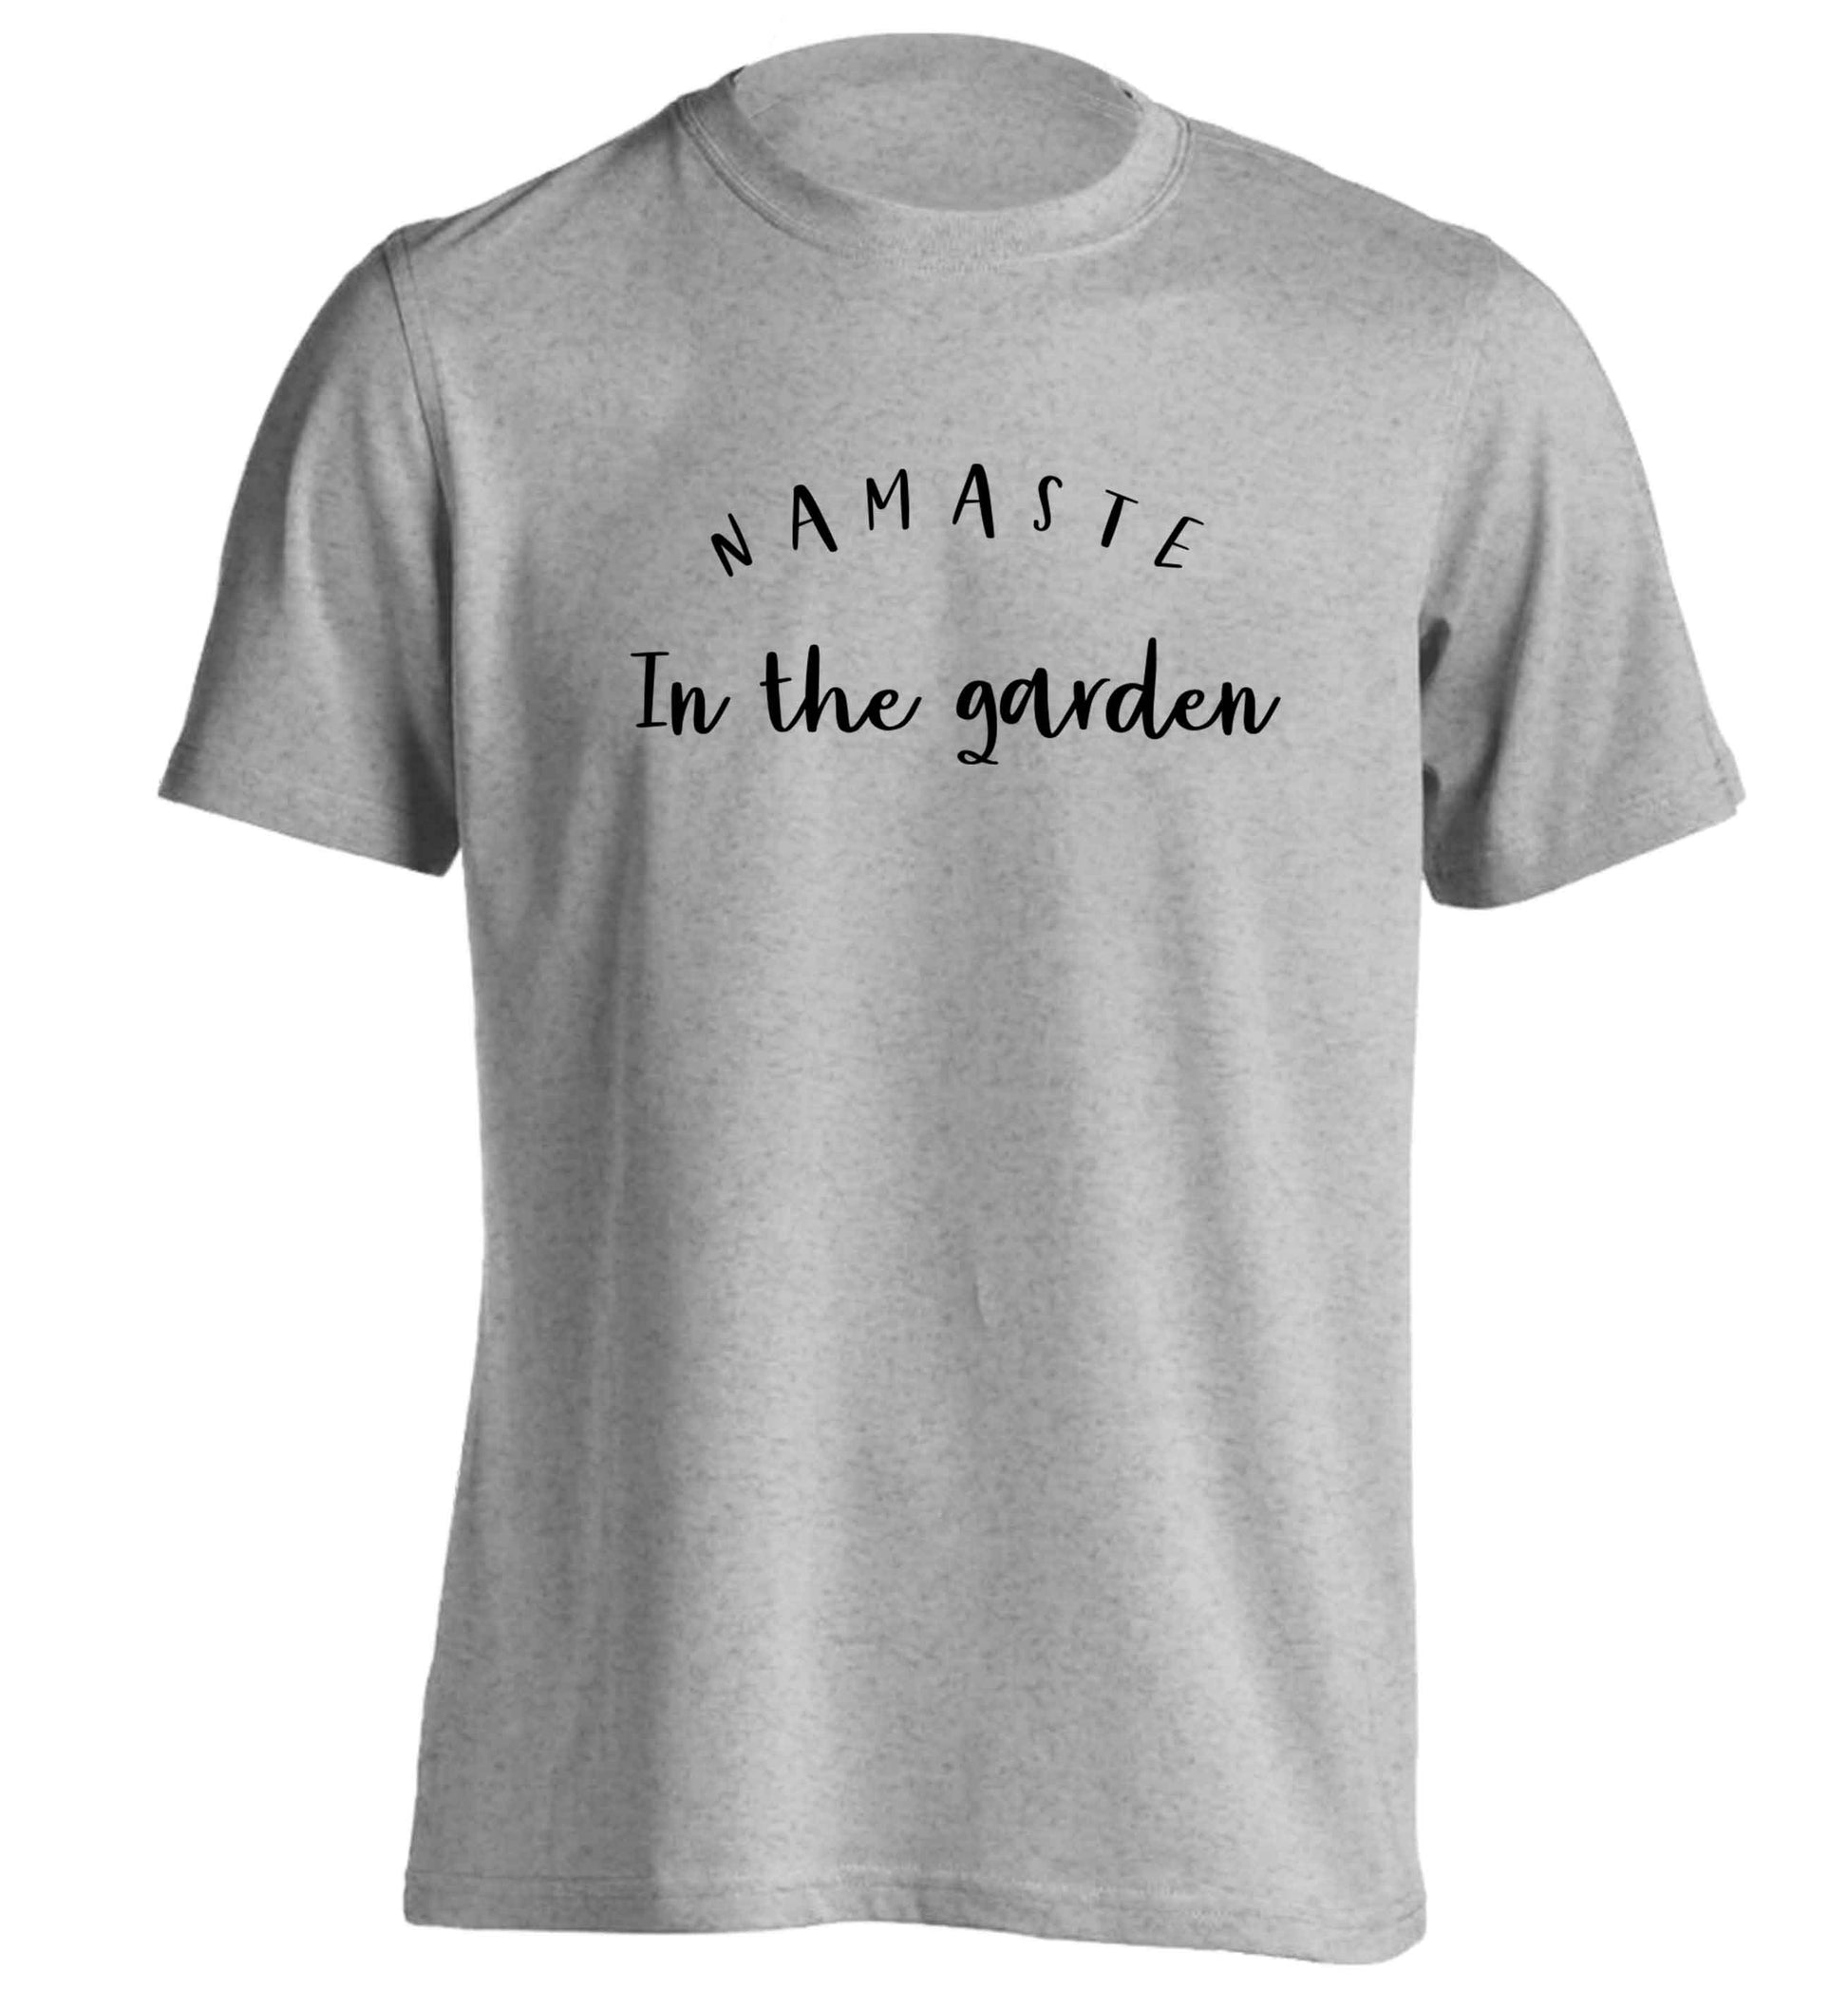 Namaste in the garden adults unisex grey Tshirt 2XL